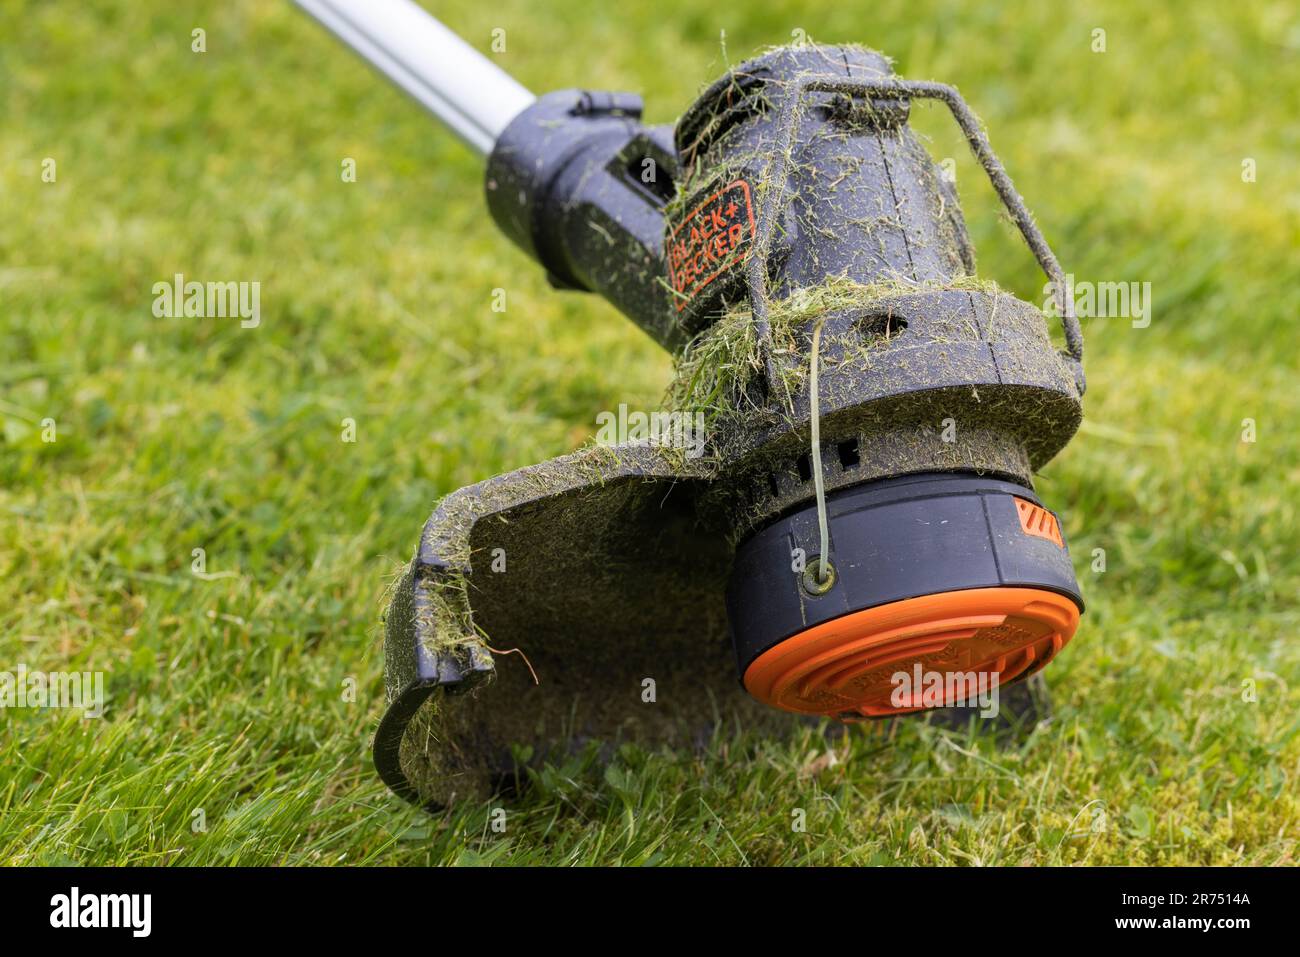 https://c8.alamy.com/comp/2R7514A/black-decker-cordless-lawn-trimmer-detail-string-spool-nylon-string-lawn-care-garden-2R7514A.jpg